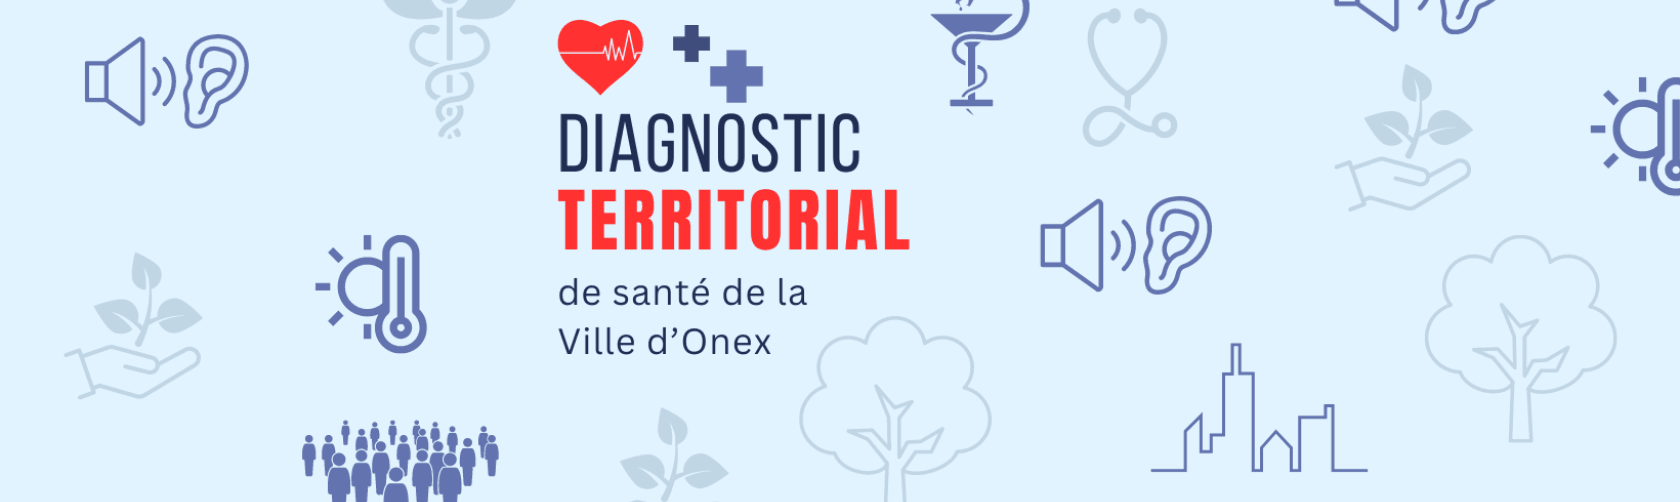 Diagnostic territorial santé onex